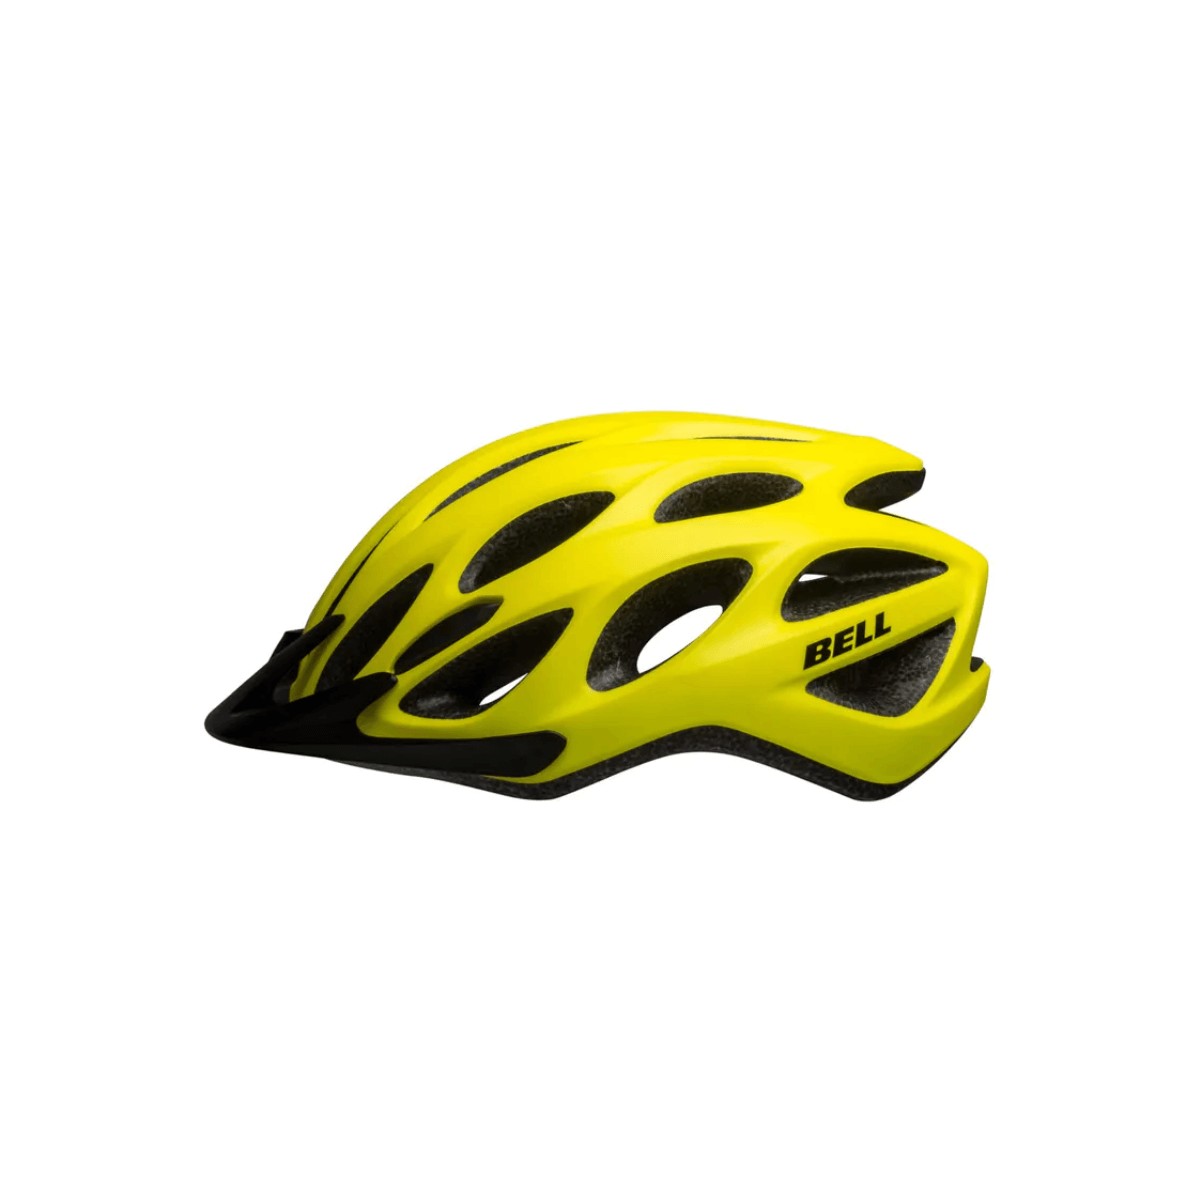 Bell Tracker Yellow Helmet